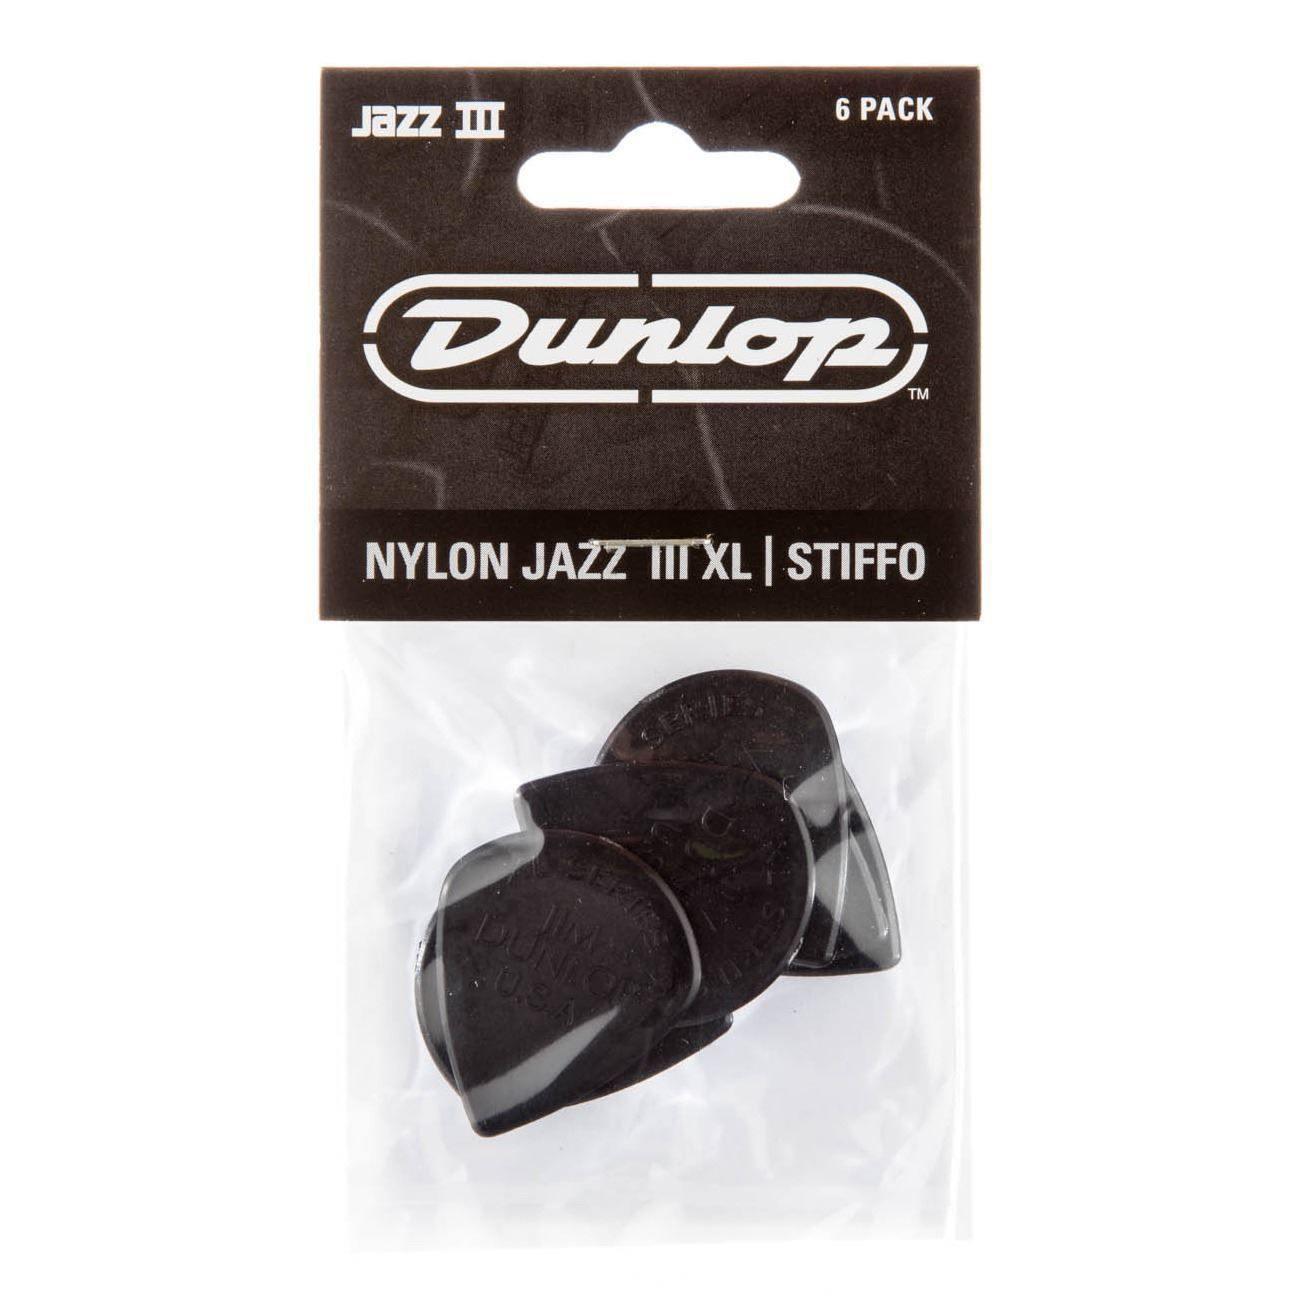 Jazz III XL Guitar Pick Player Pack Black Nylon Sti - Guitars - Picks by Jim Dunlop at Muso's Stuff